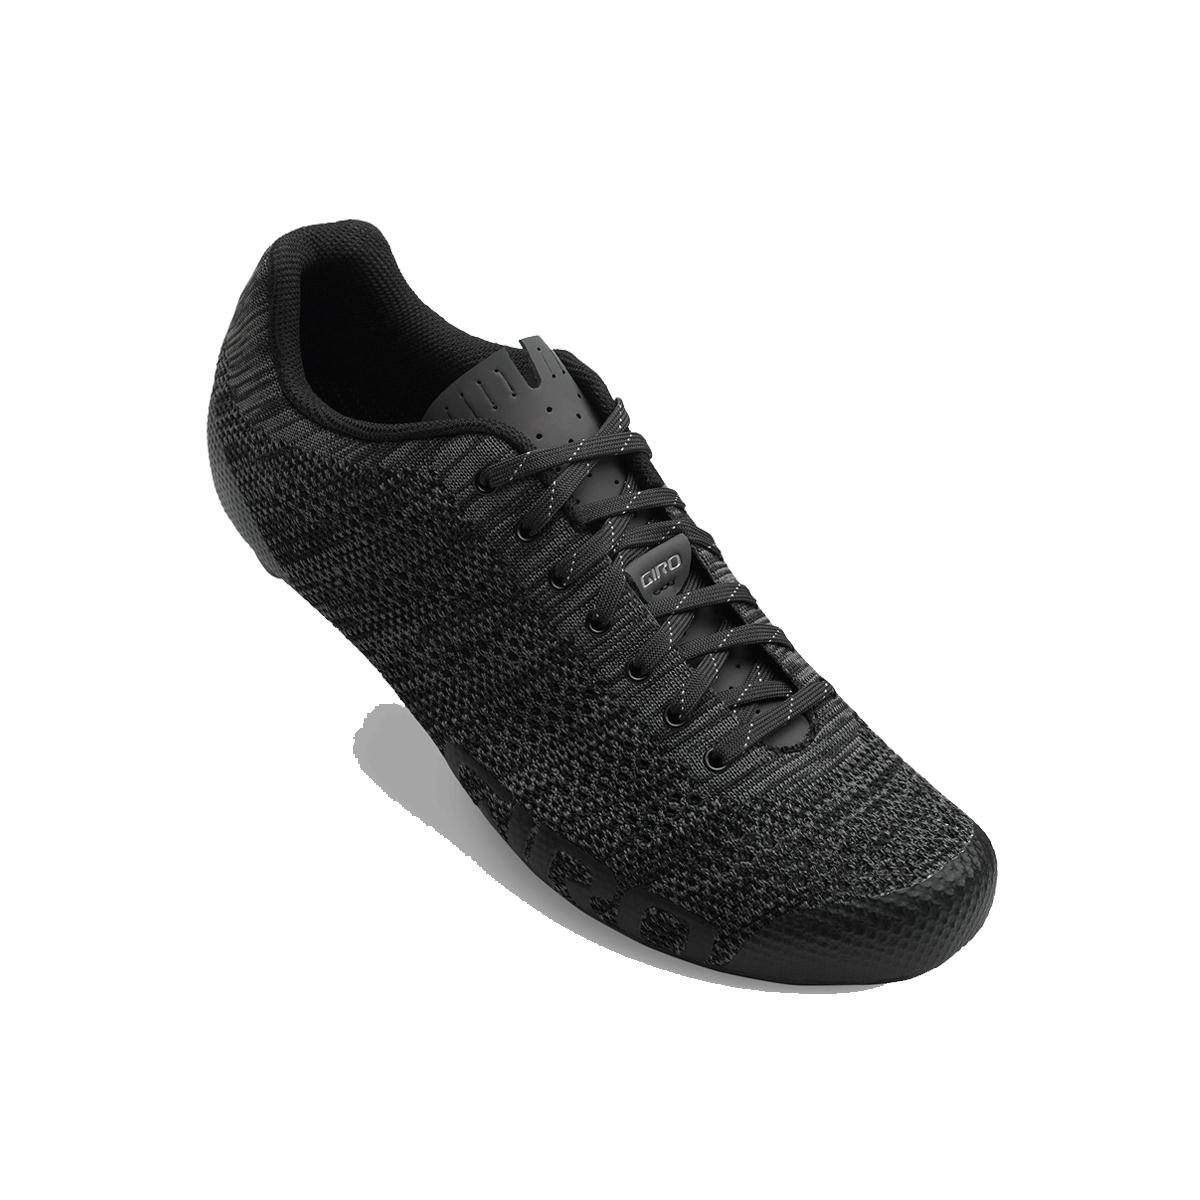 GIRO Empire E70 Knit Road Cycling Shoes 2018 Black/Charcoal Heather 40